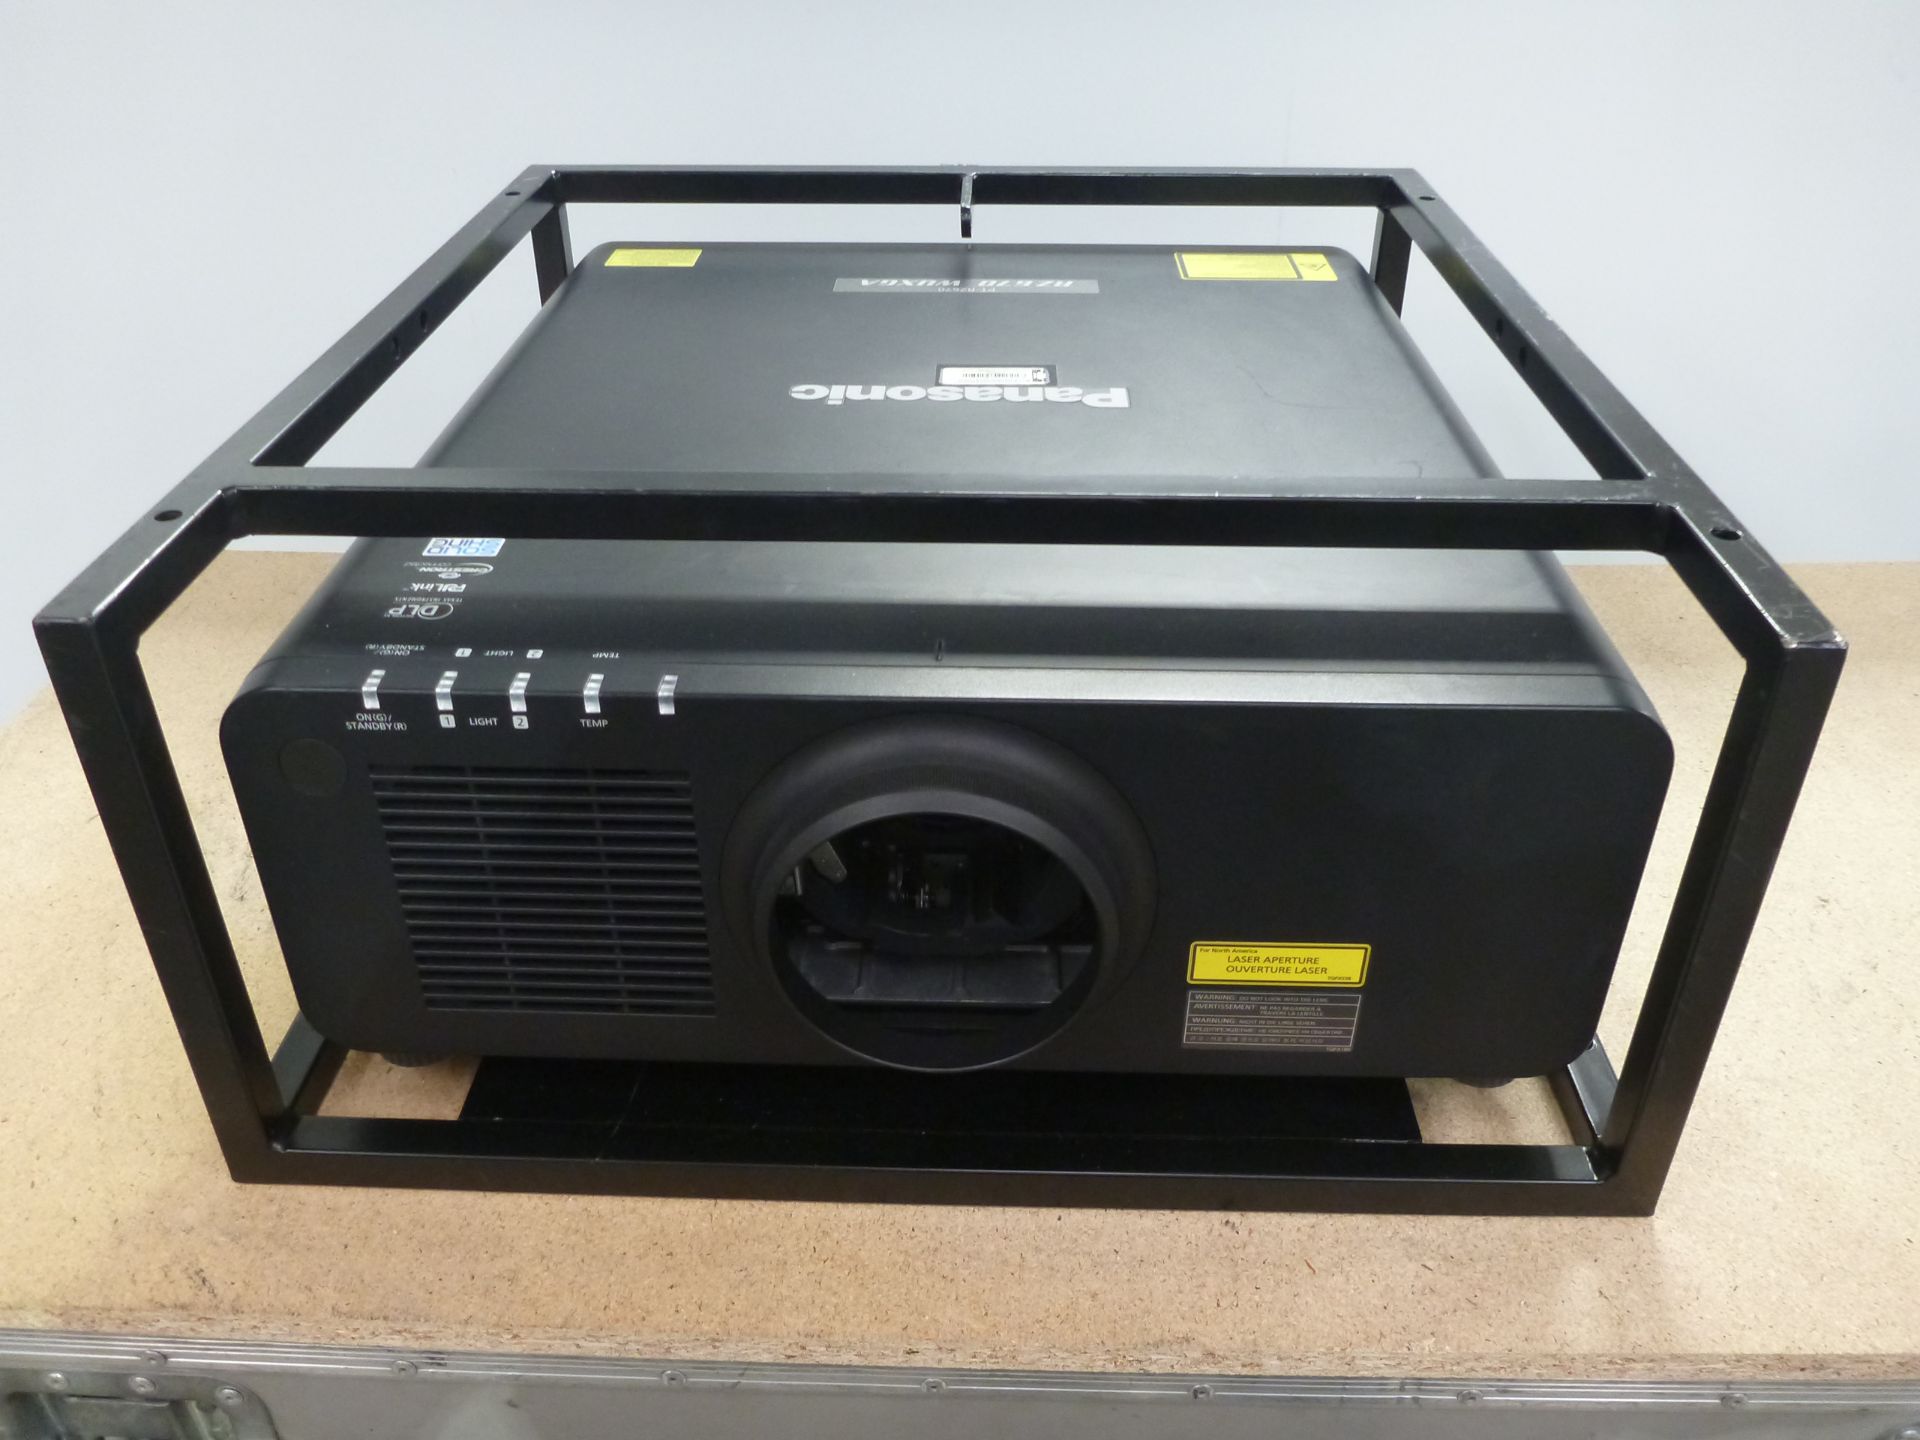 Panasonic Laser Projector, Model PT-RZ670, S/N SH5512098, YOM 2015, In flight case with standard 1.